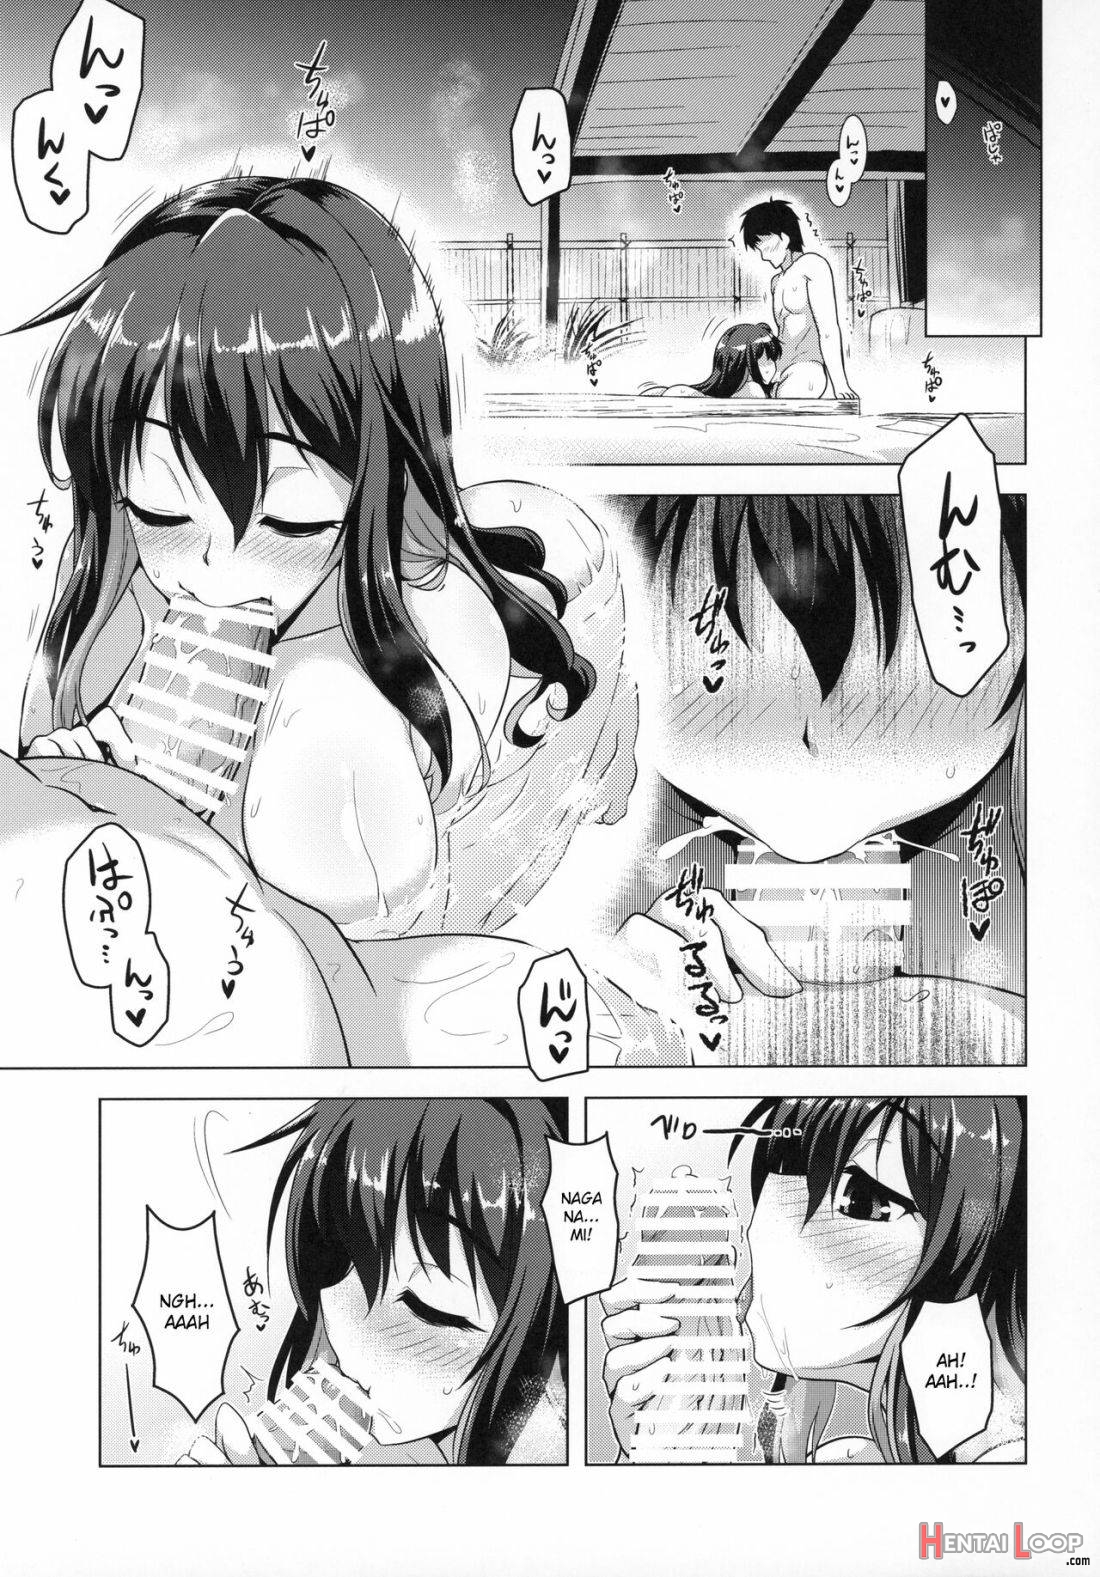 Milky DD ~Naganami Hot Milk~ page 4